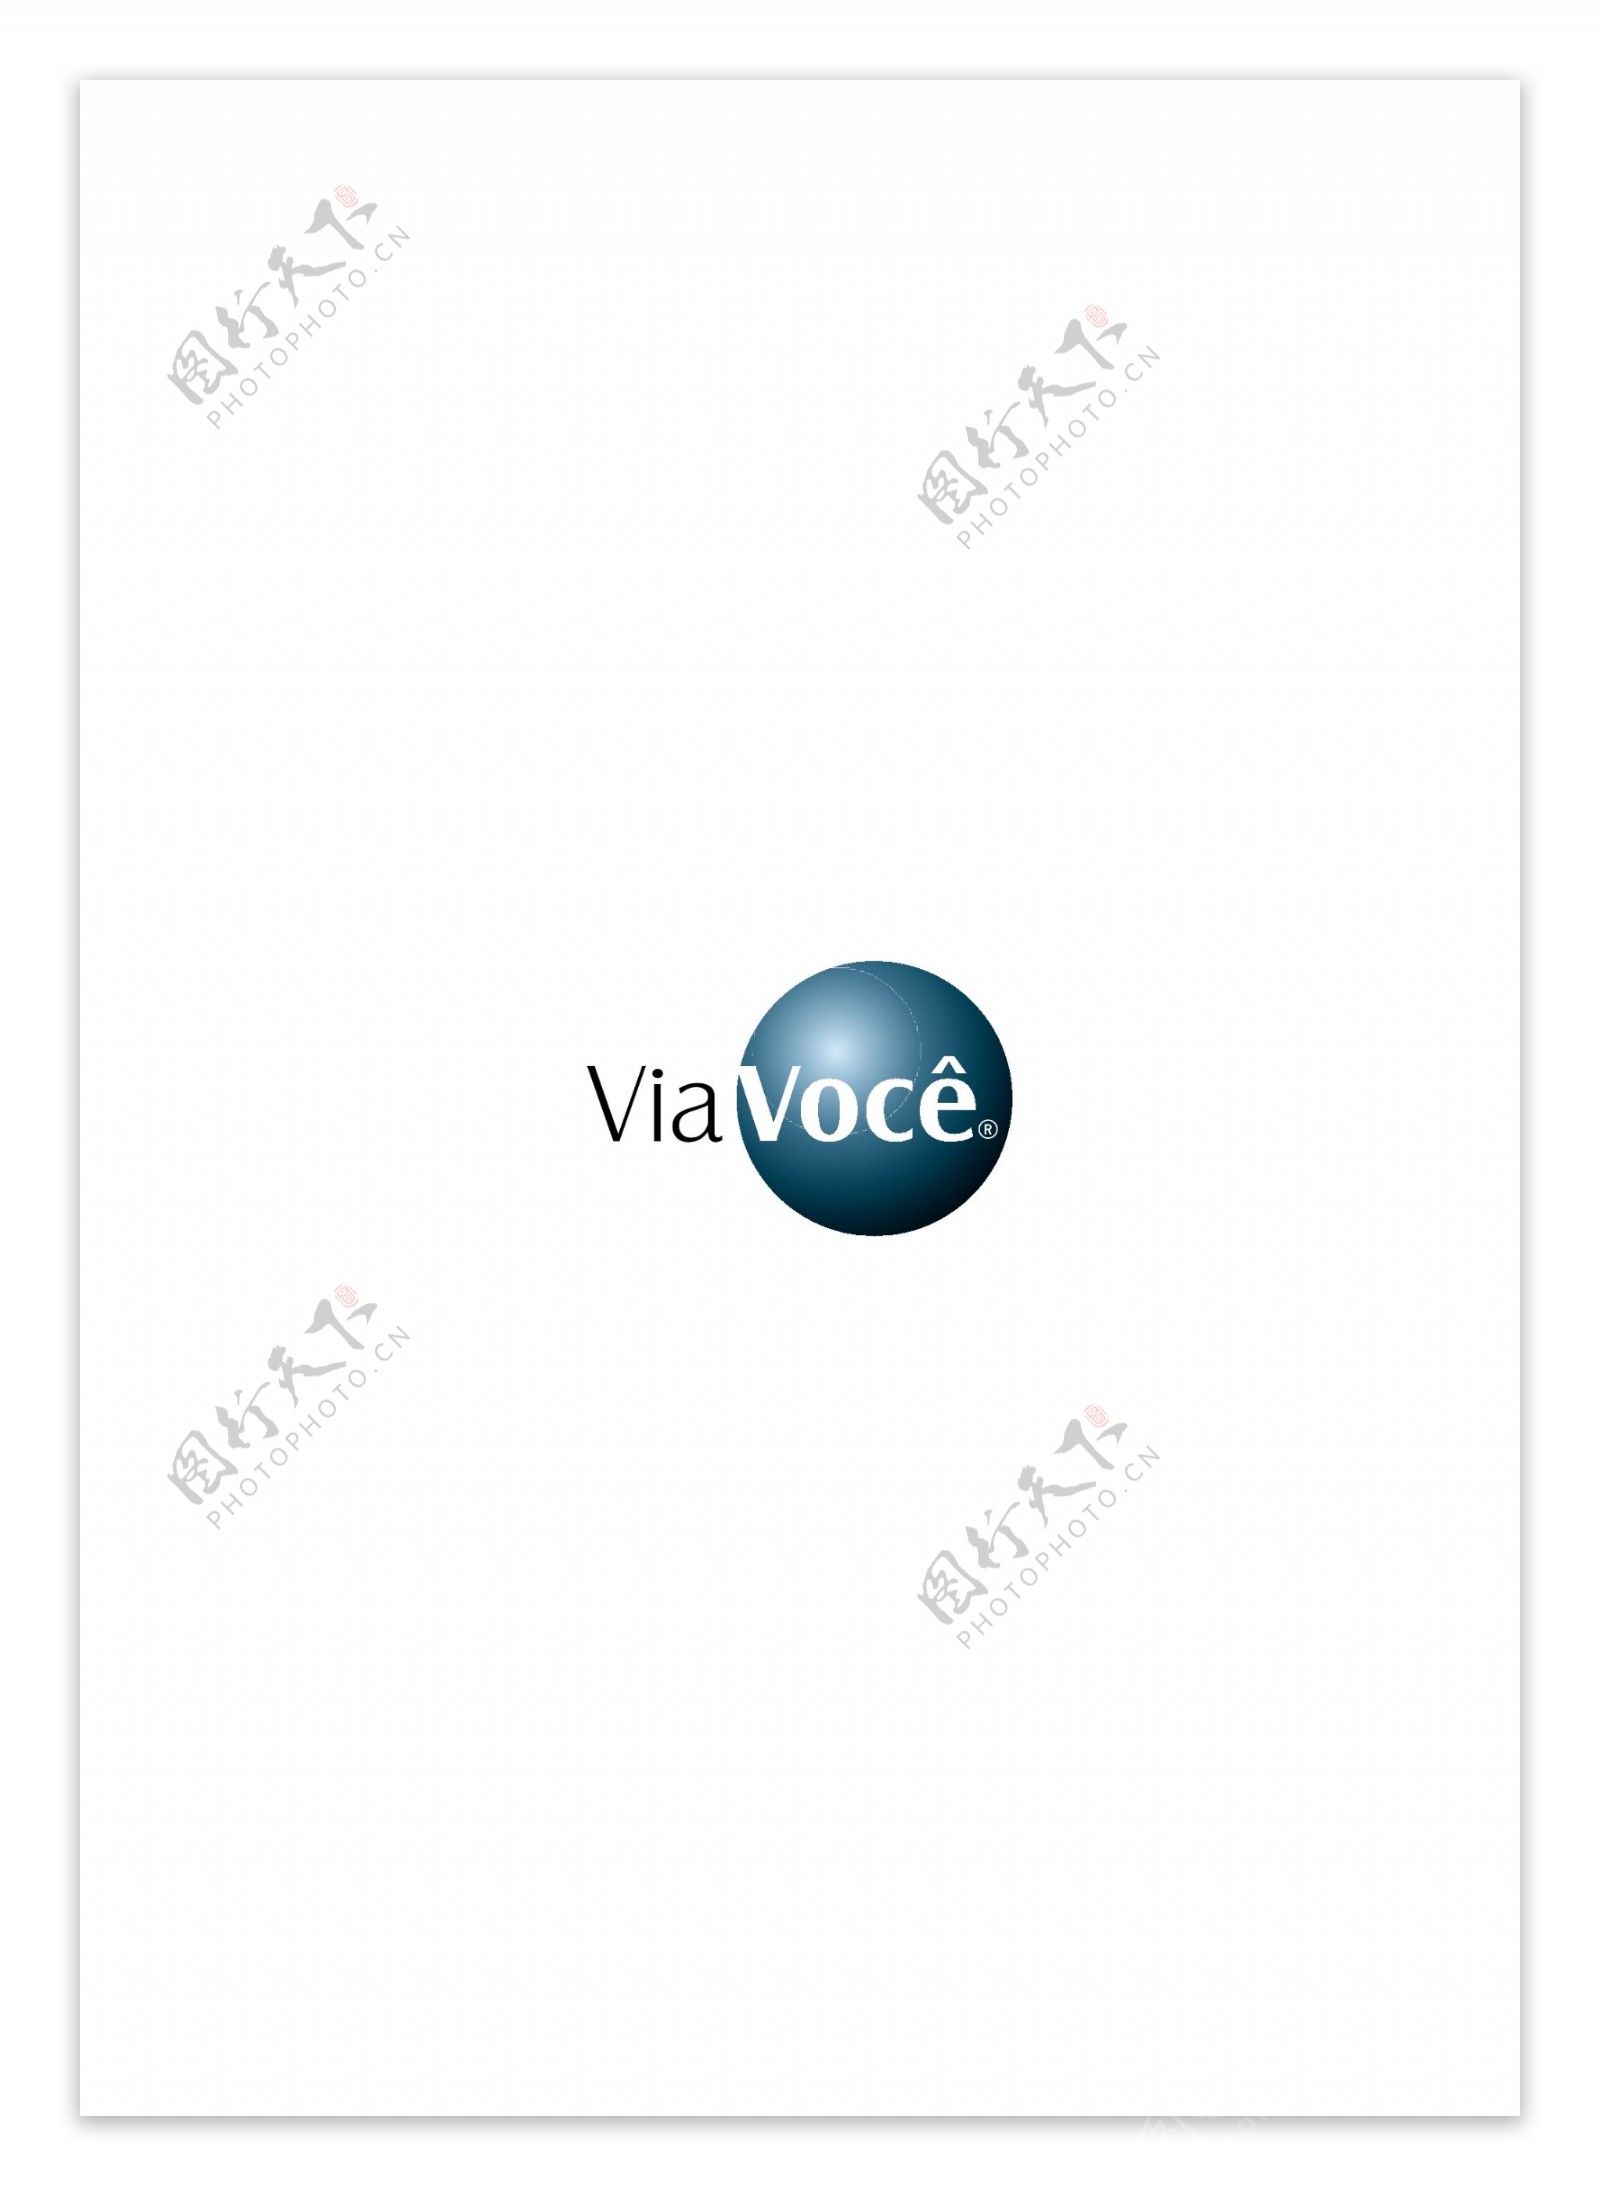 ViaVocelogo设计欣赏ViaVoce服务行业标志下载标志设计欣赏